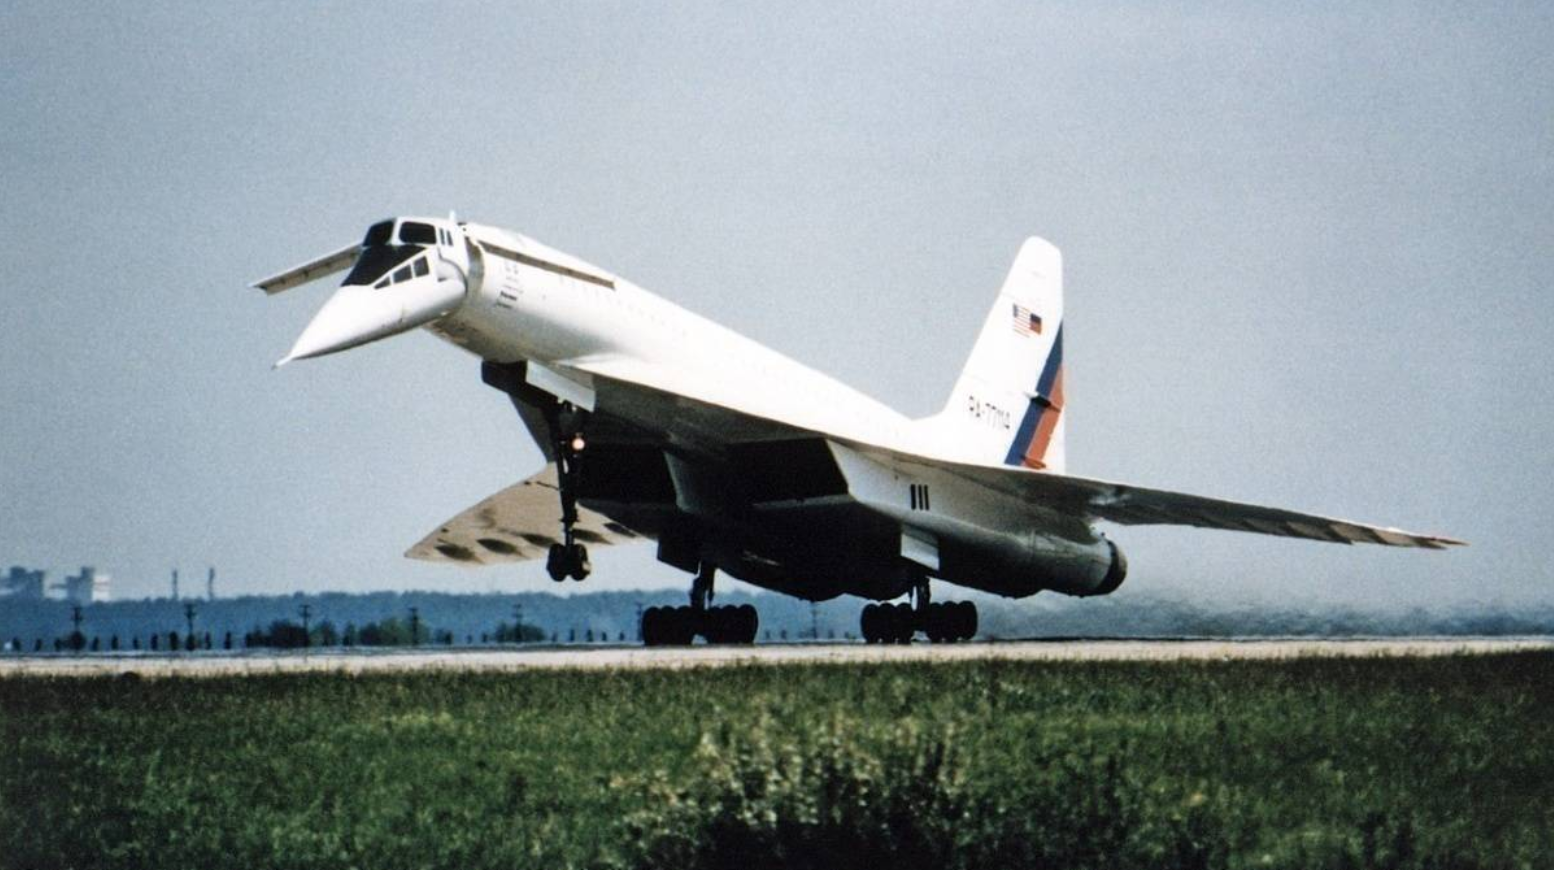 Image of Tupolev Tu-144, the world's fastest aircraft